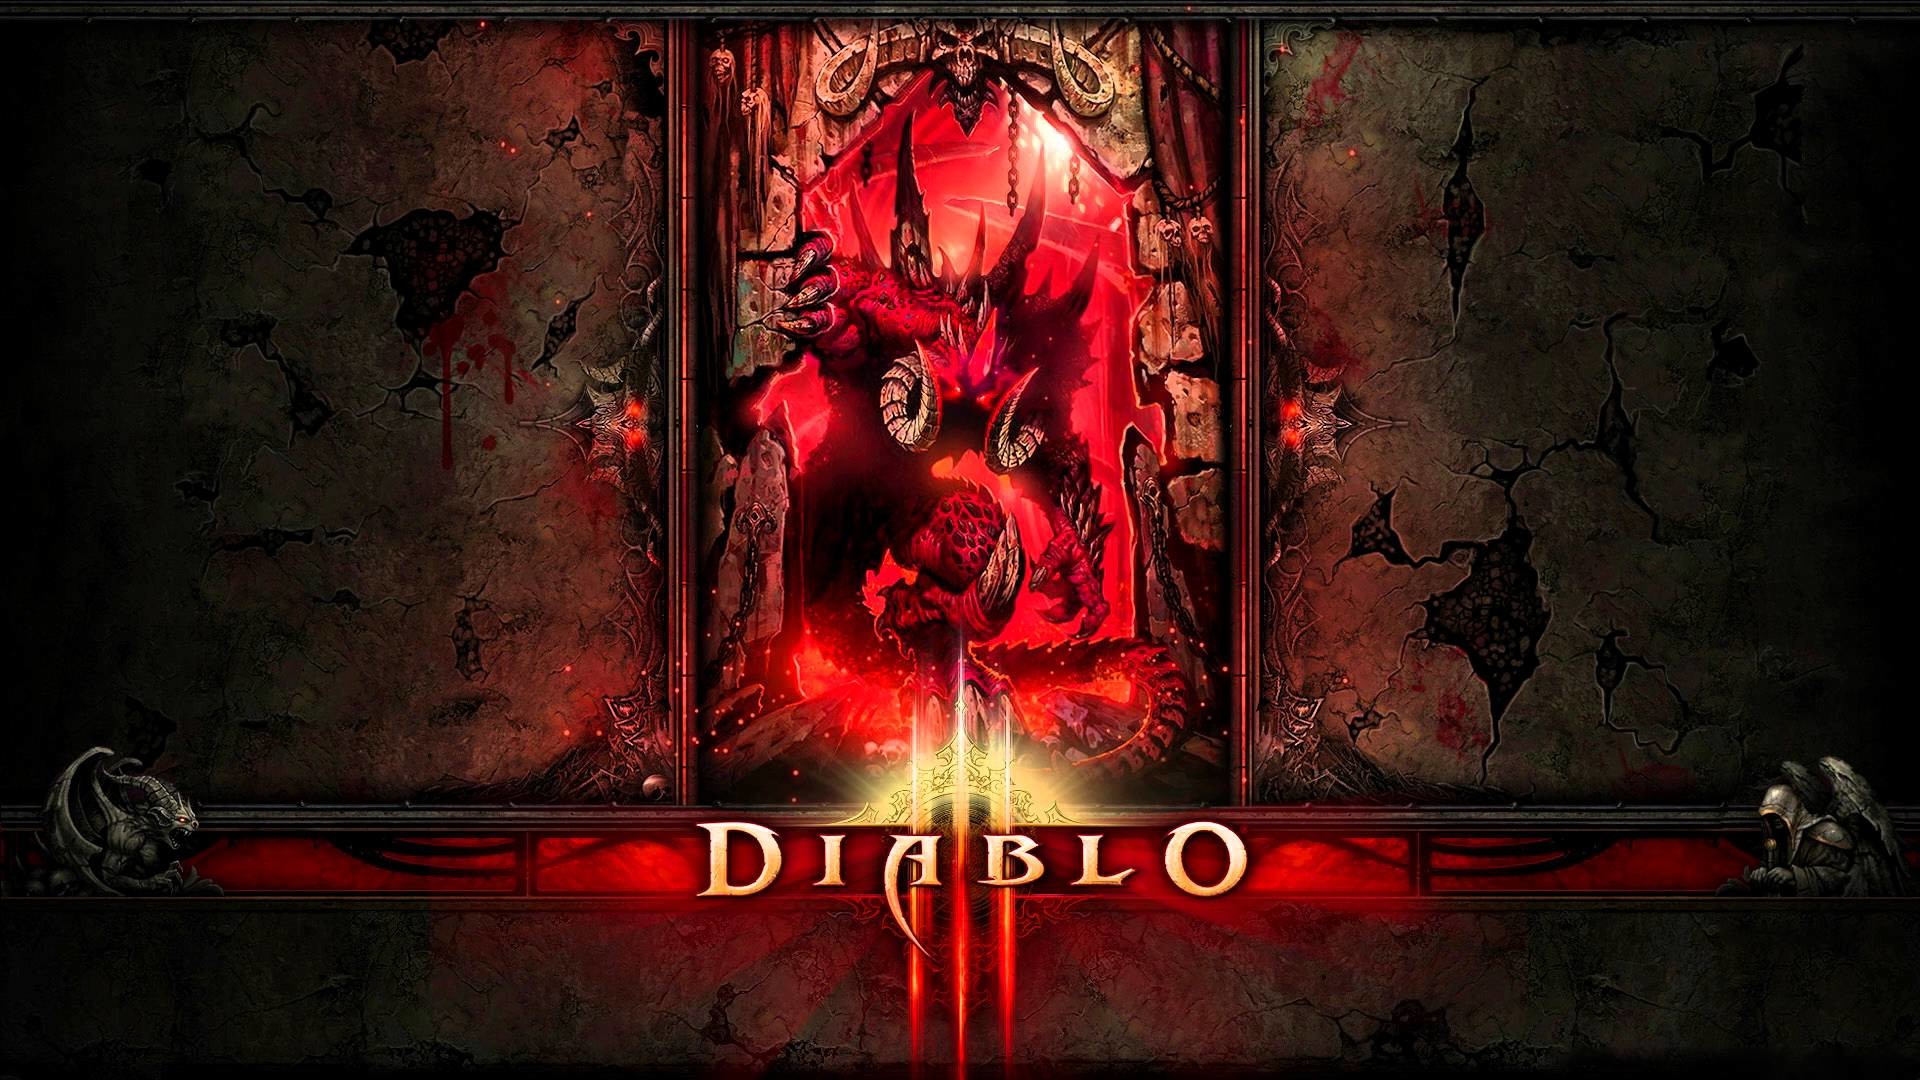 1920x1080 Diablo - "Eternal Conflict" OST Animated Wallpaper